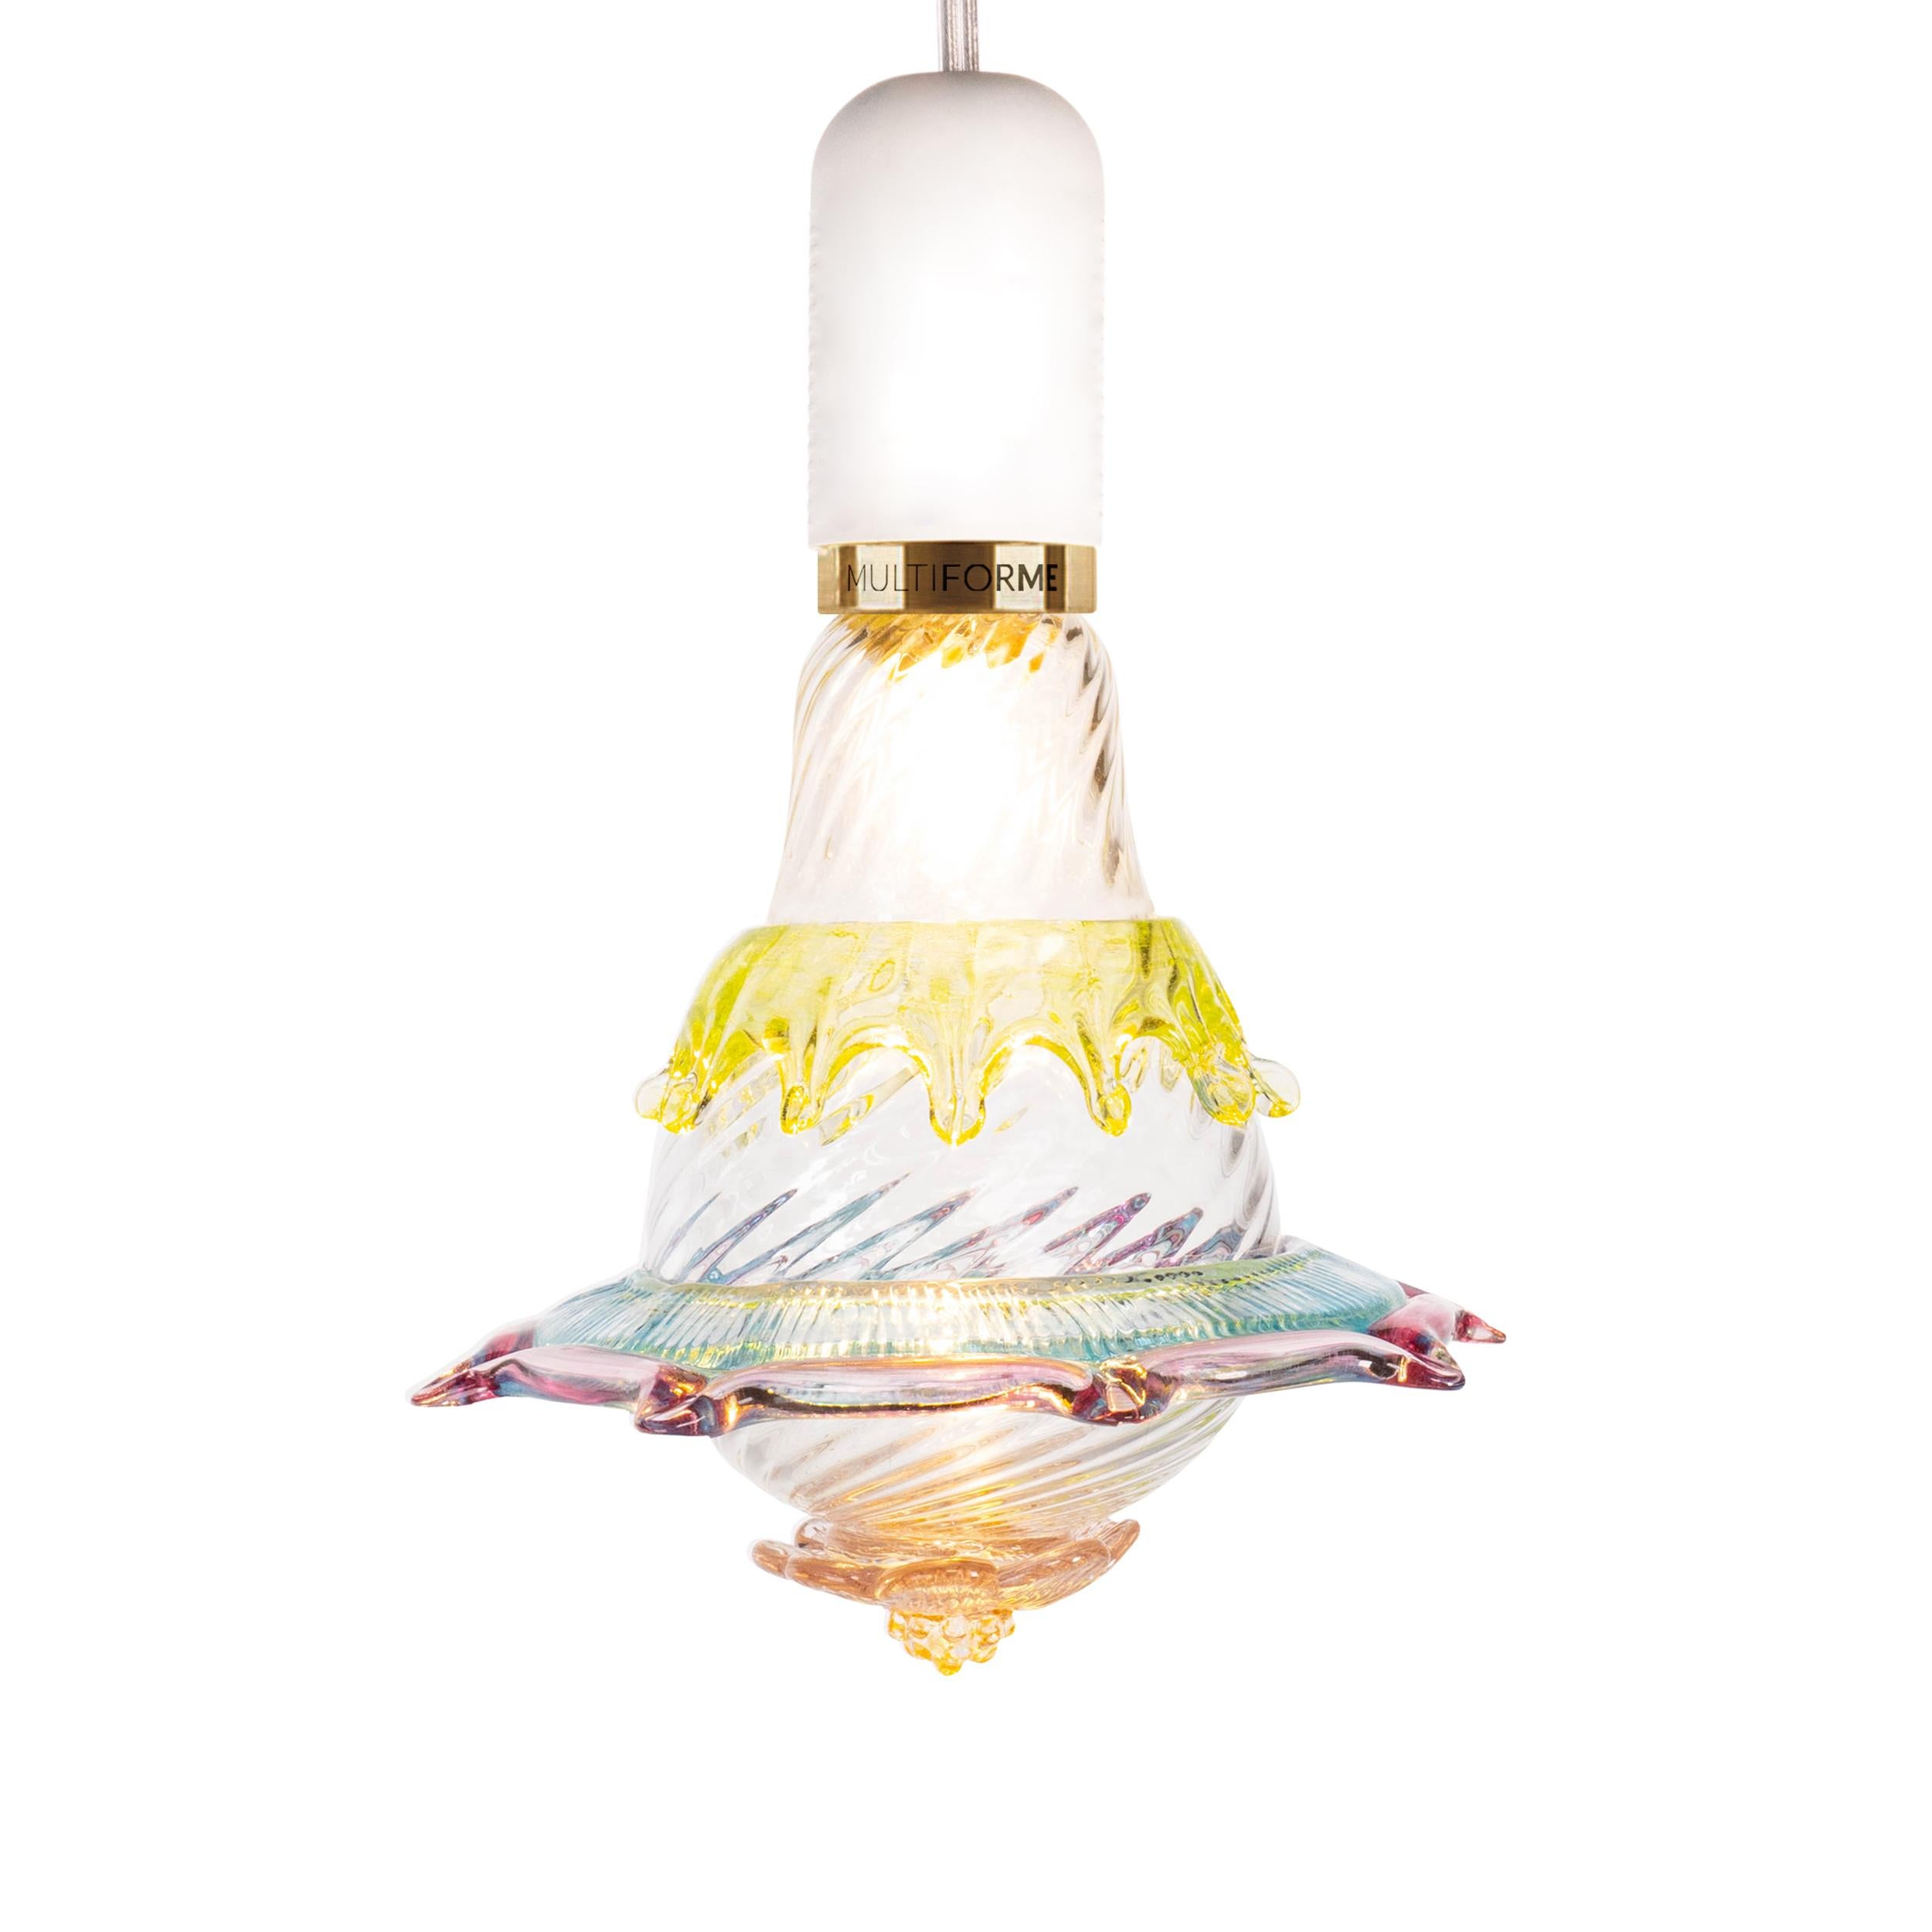 Artistic glass lightbulb chandelier Murano Bulb Marcantonio X Multiforme #05 In New Condition For Sale In Trebaseleghe, IT